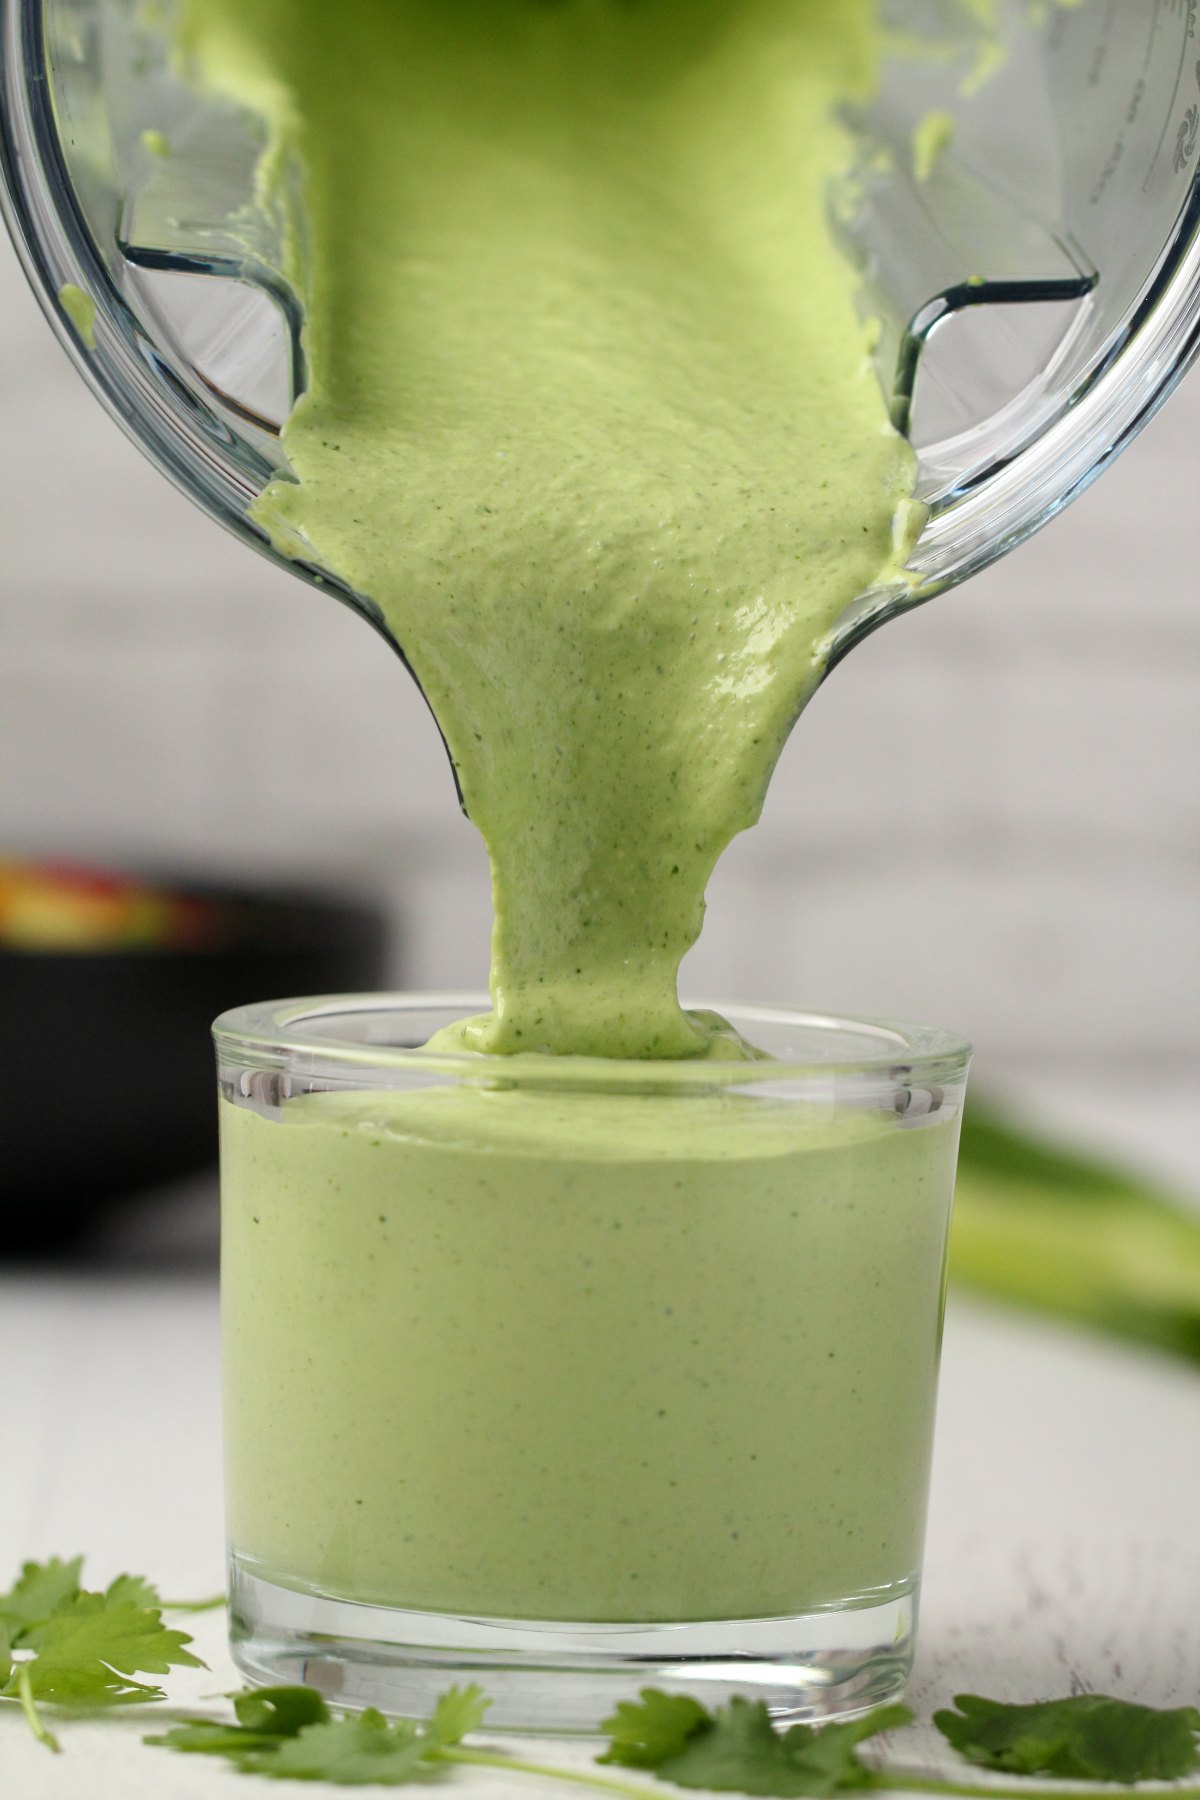 Vegan green goddess dressing pouring from a blender jug into a glass jar. 